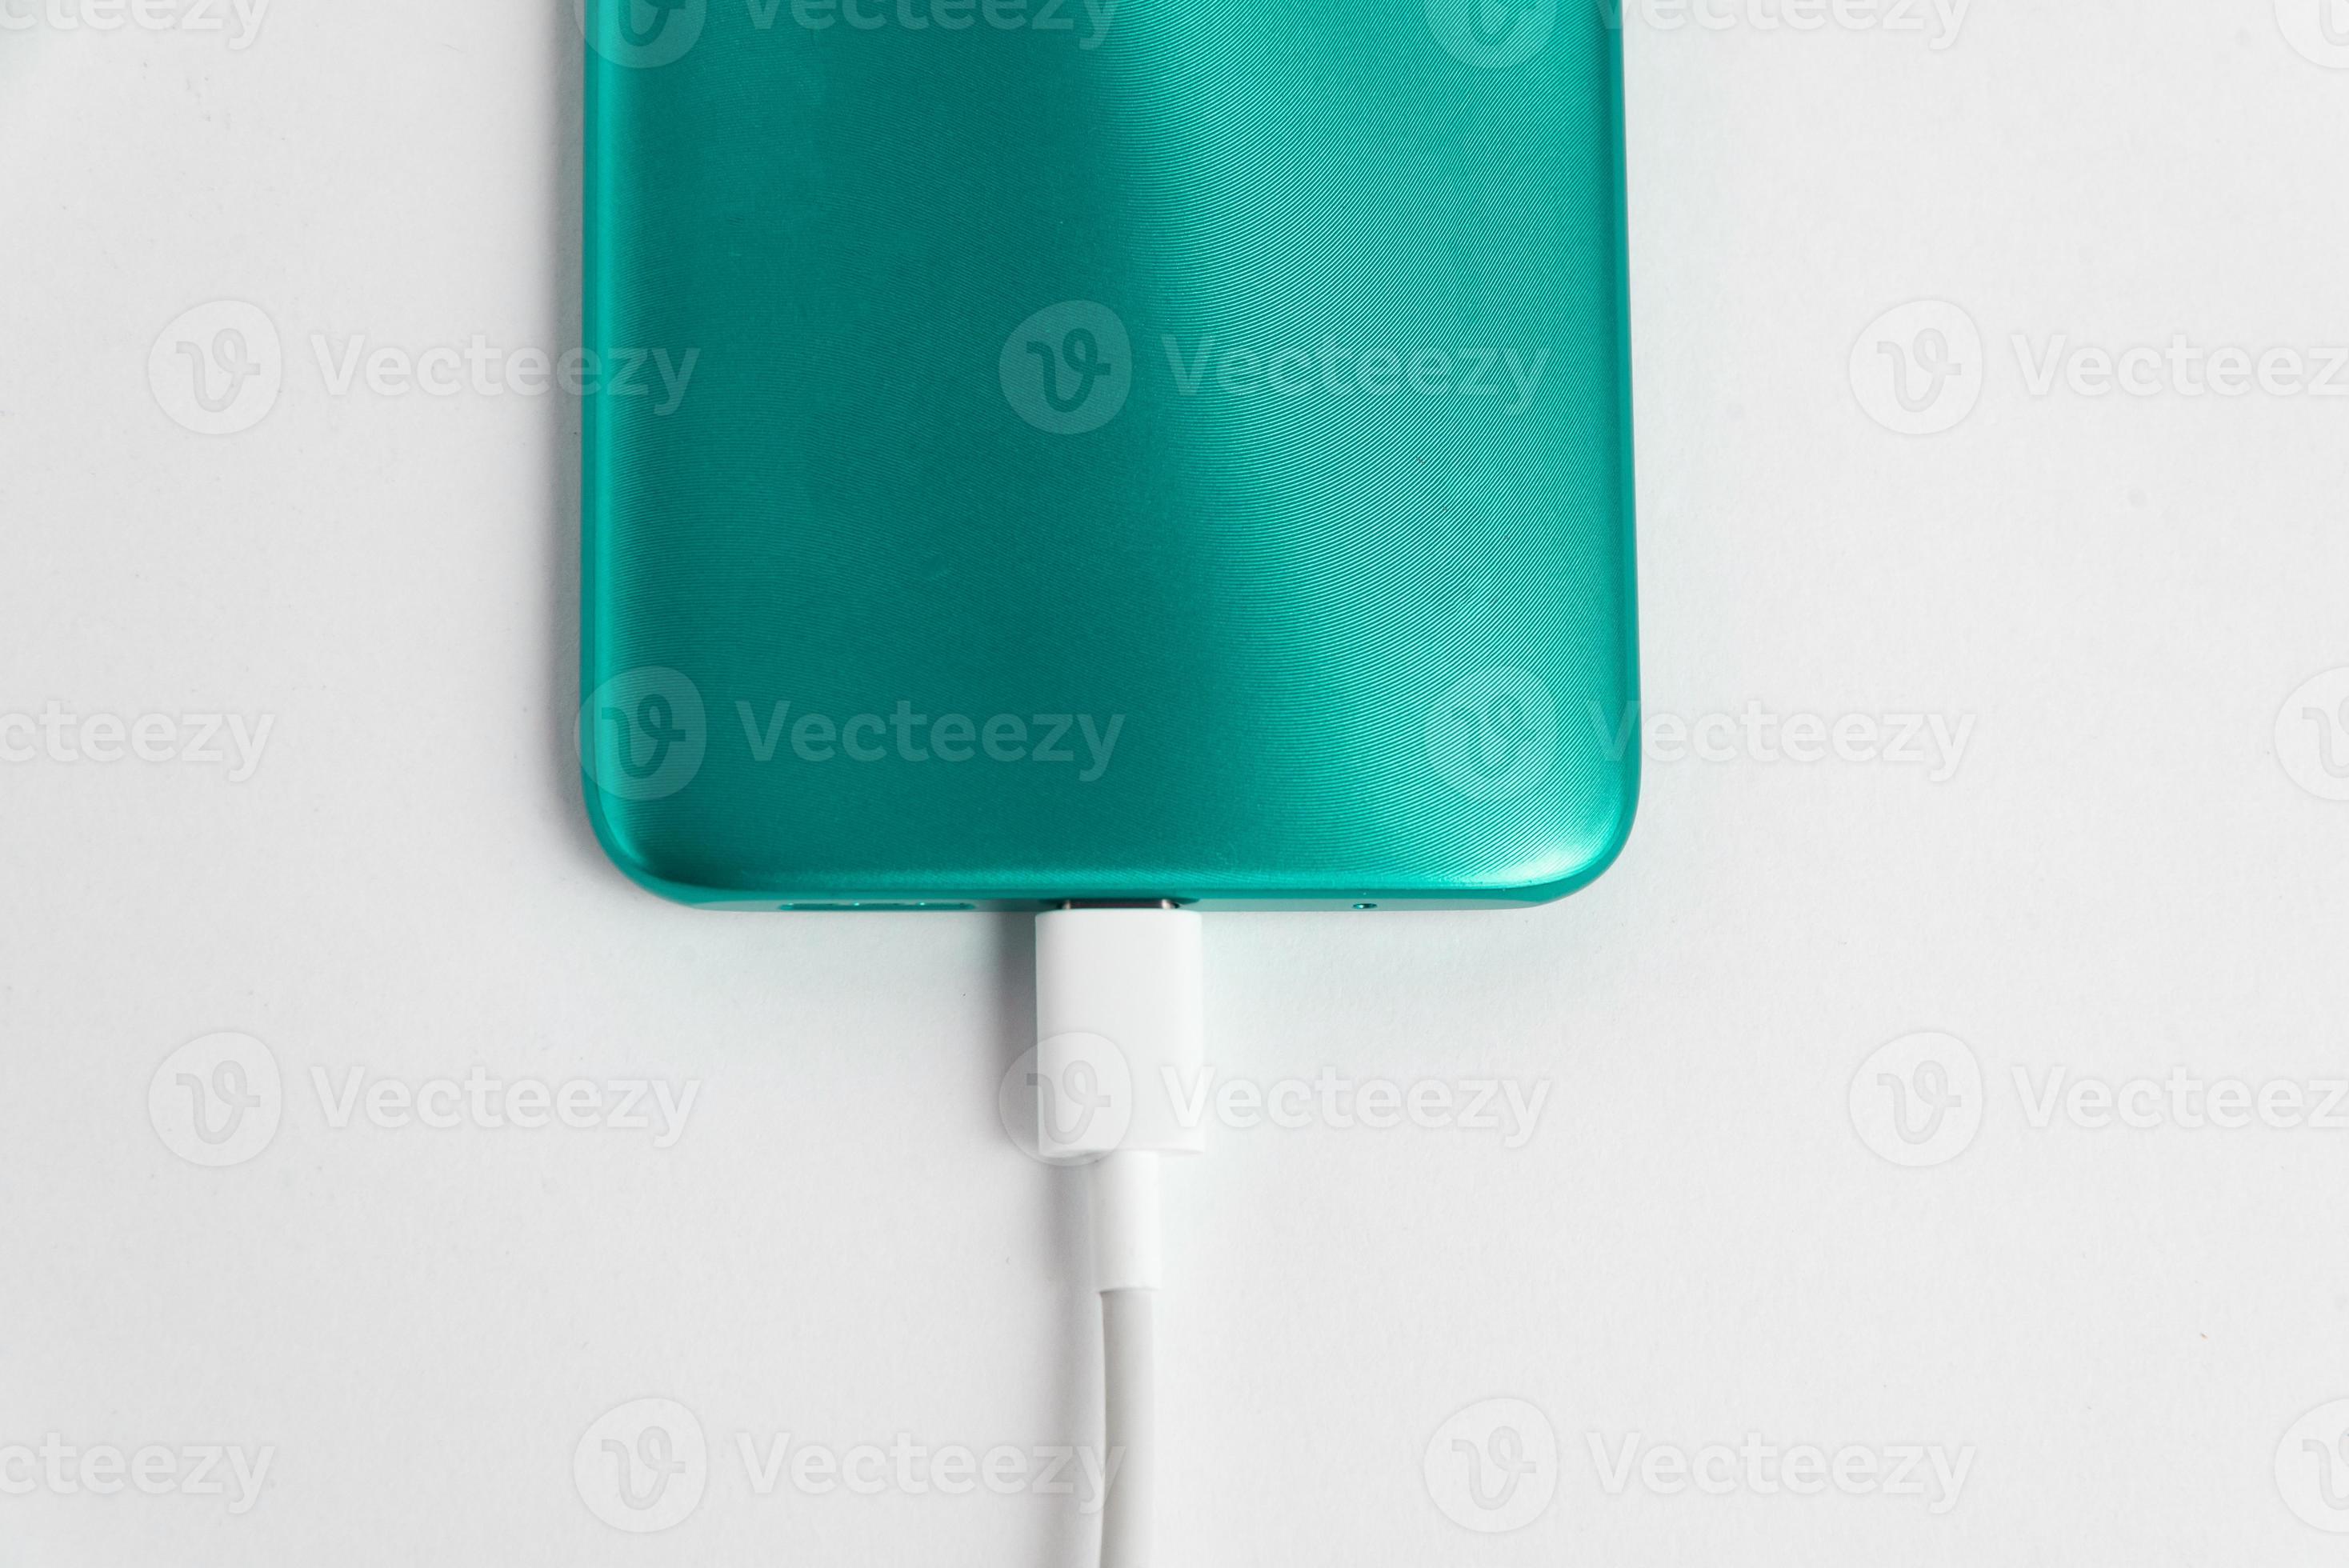 teléfono celular verde conectado al cable usb tipo c - cargando foto